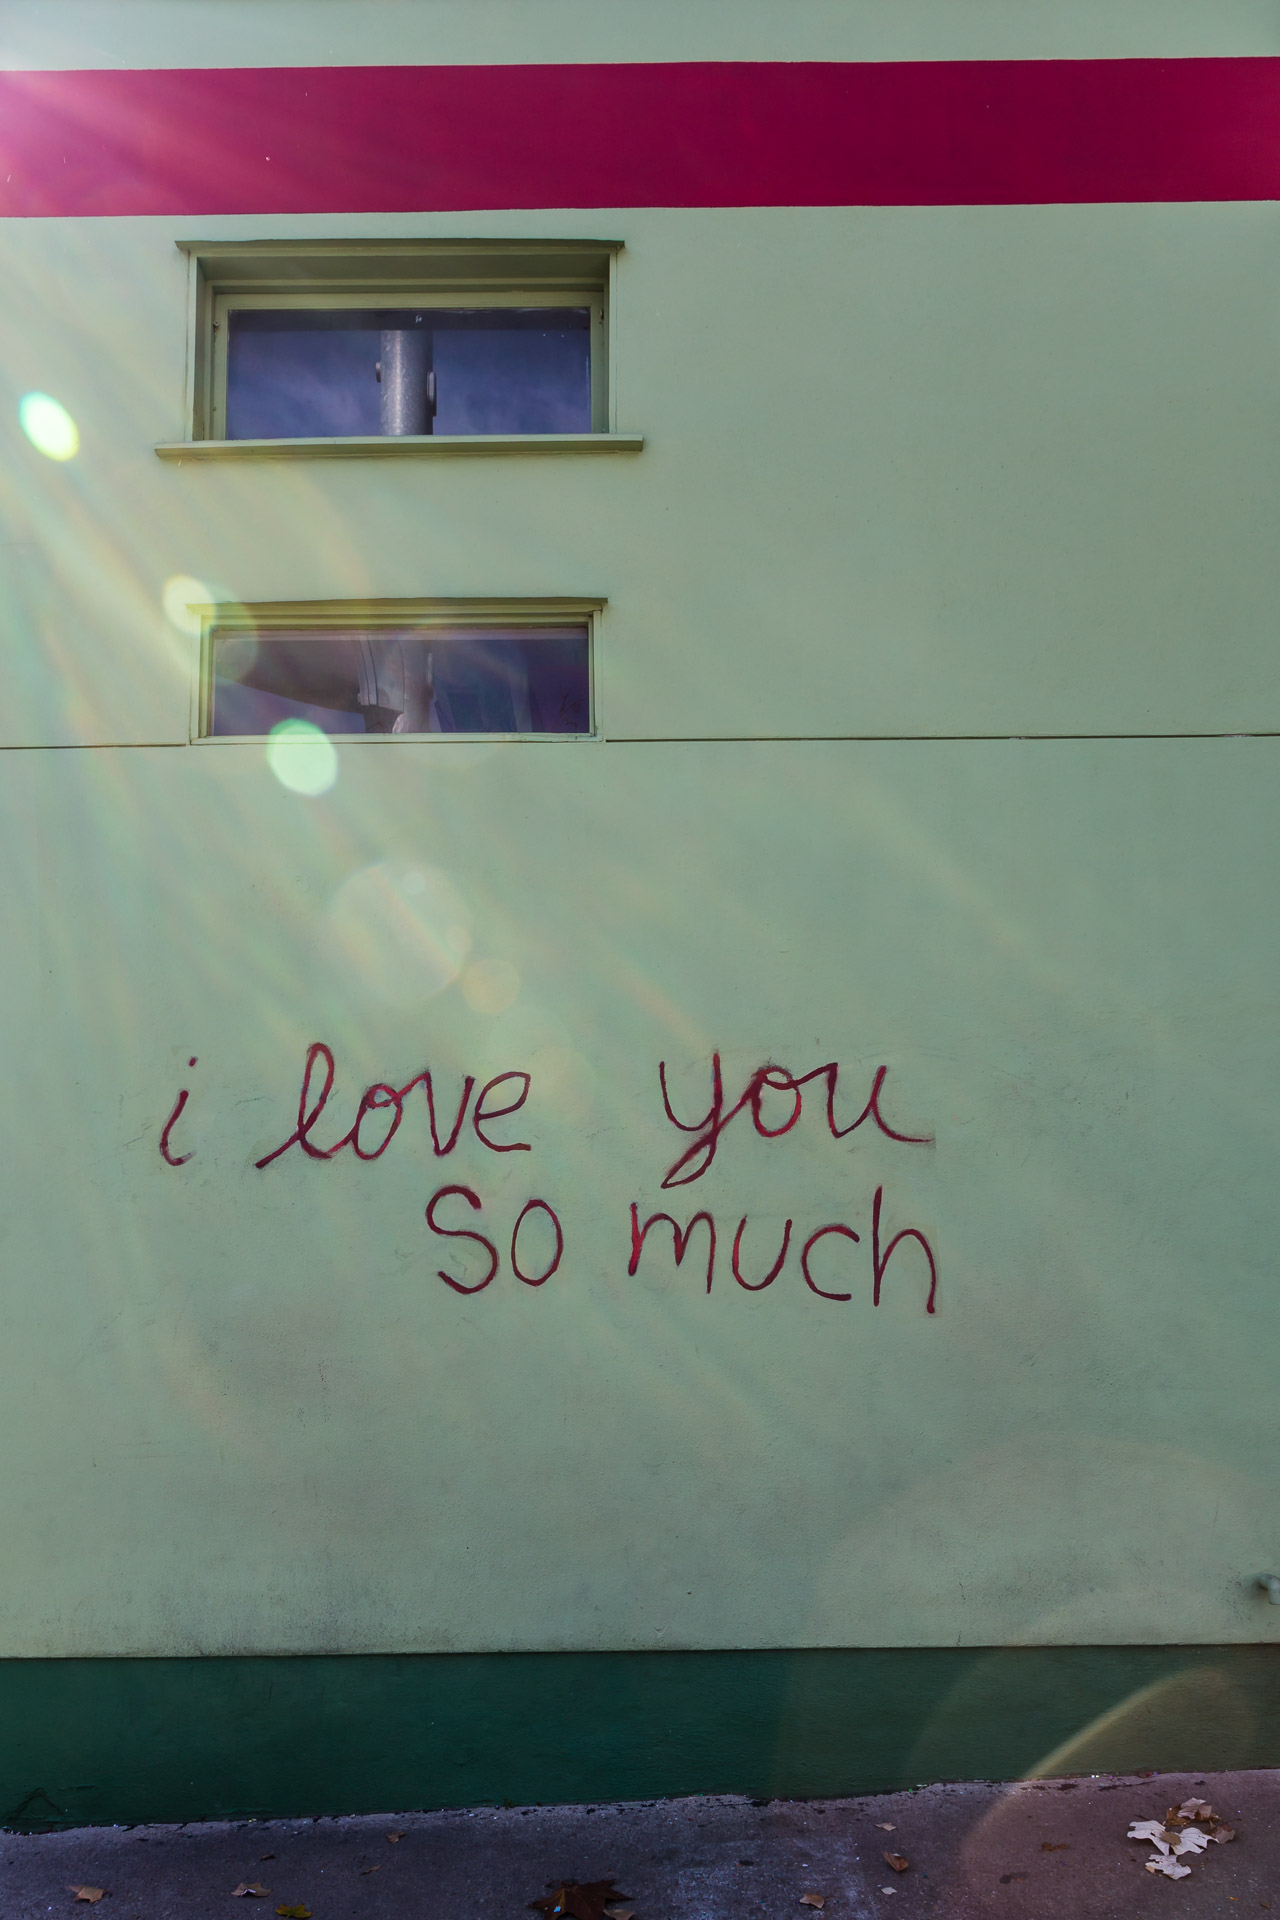 Austin Street Art (love you)